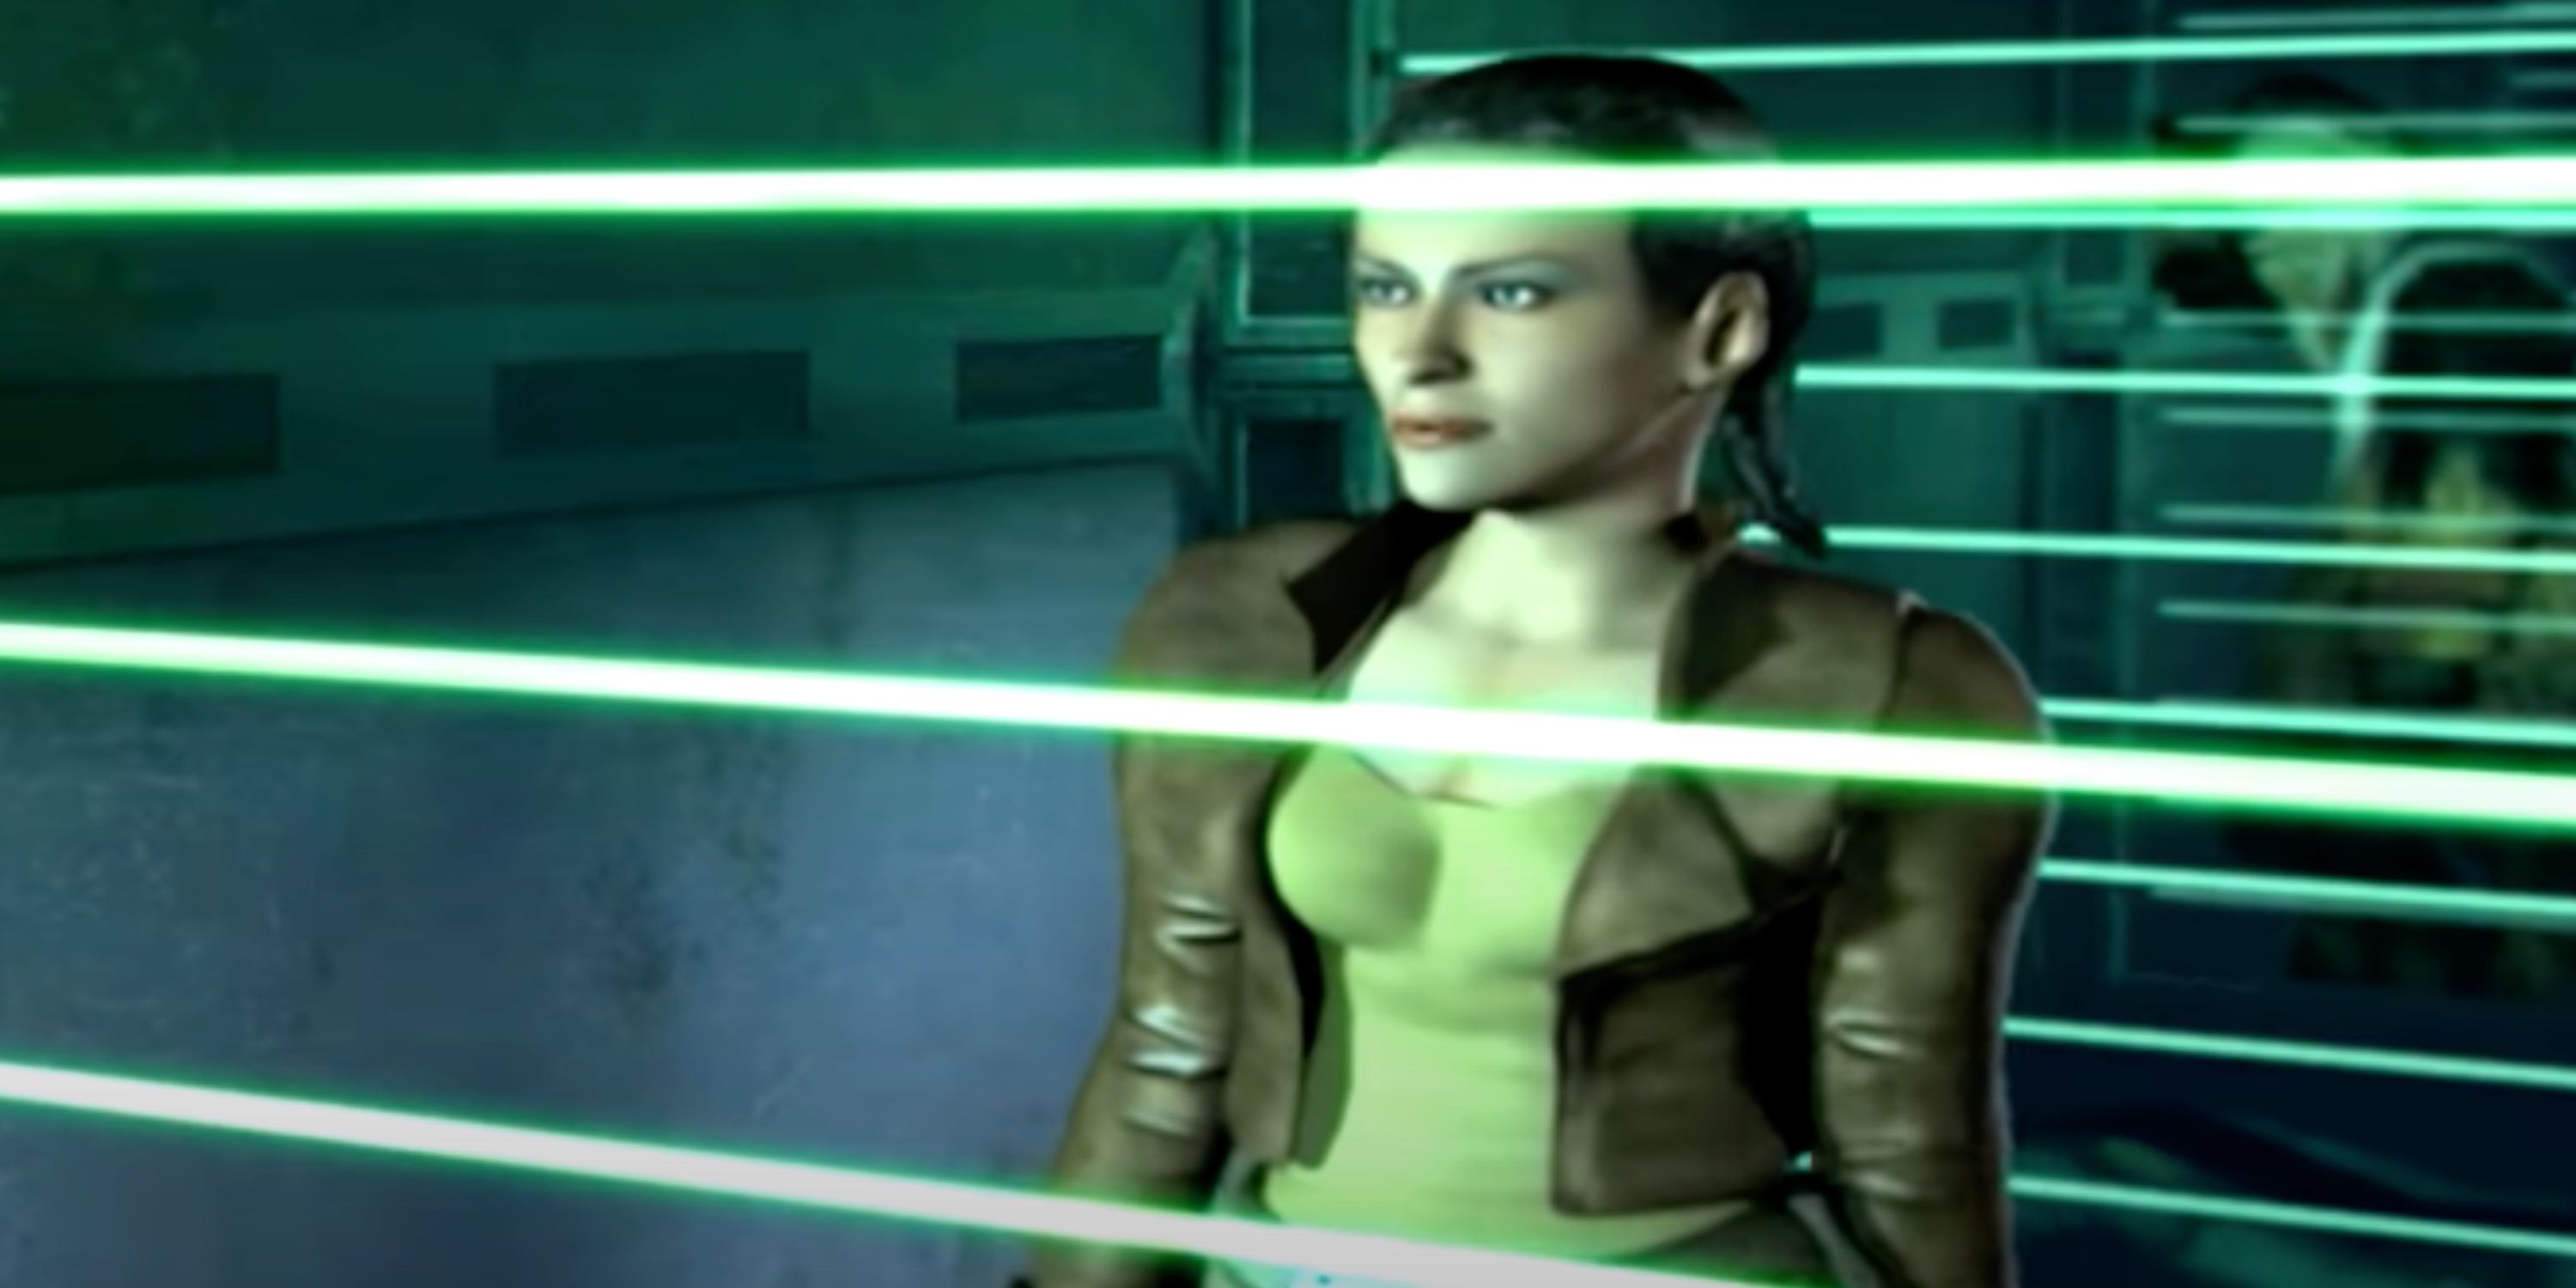 bera_kazan looking out behind green laser bars in Star Wars the clone wars 2002 video game